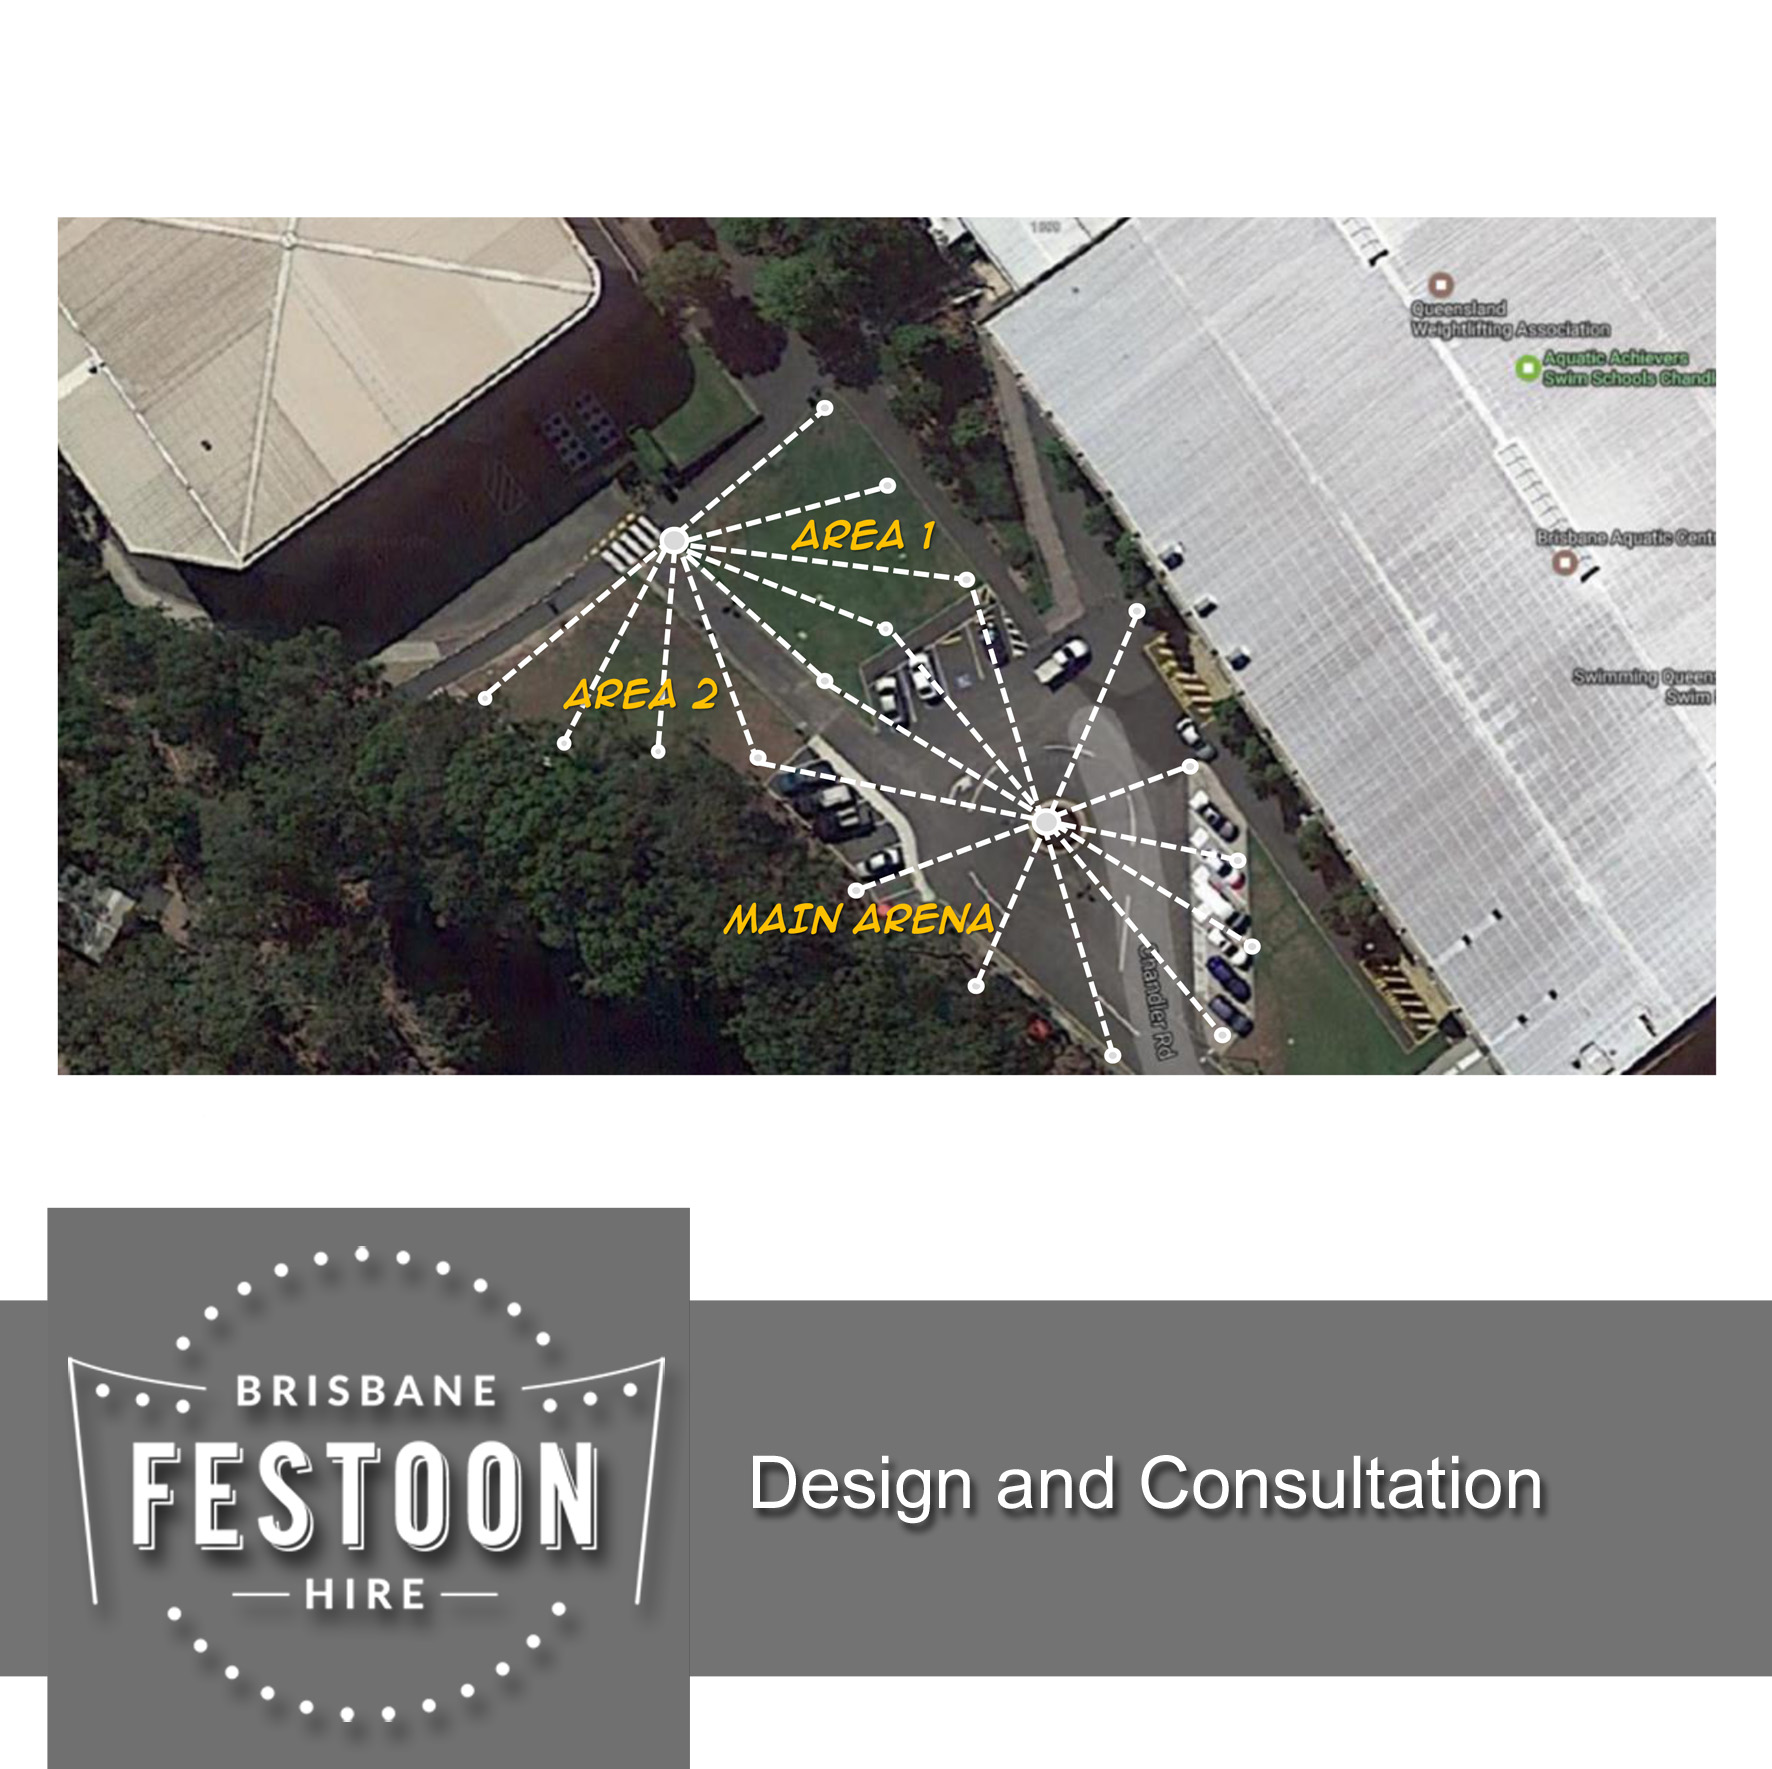 Brisbane Festoon Hire - Design and Consultation BLK 1.jpg